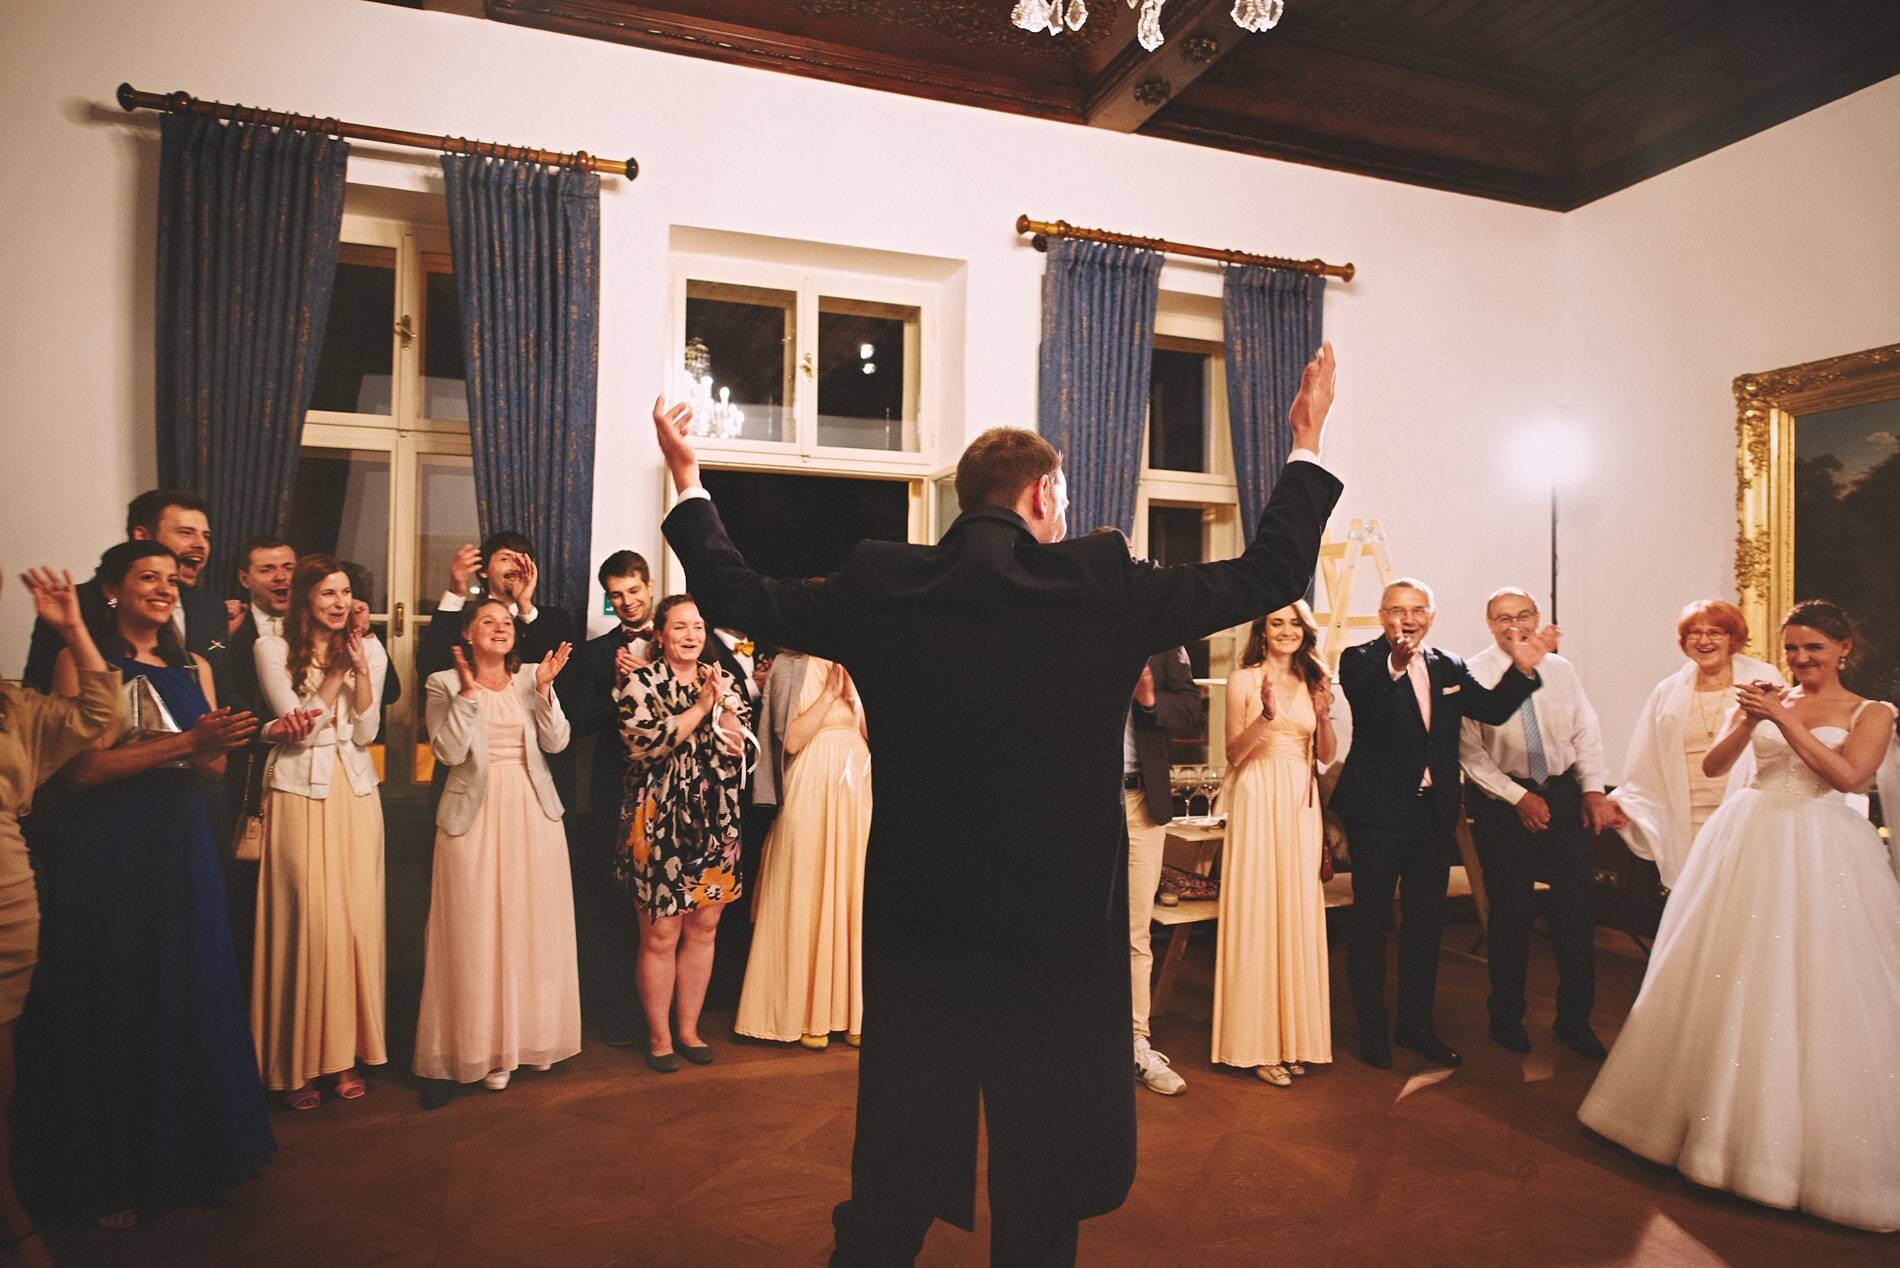 Lenka and Ondra's wedding - Evening wedding celebration - Wedding in Chateau Trnová near Prague